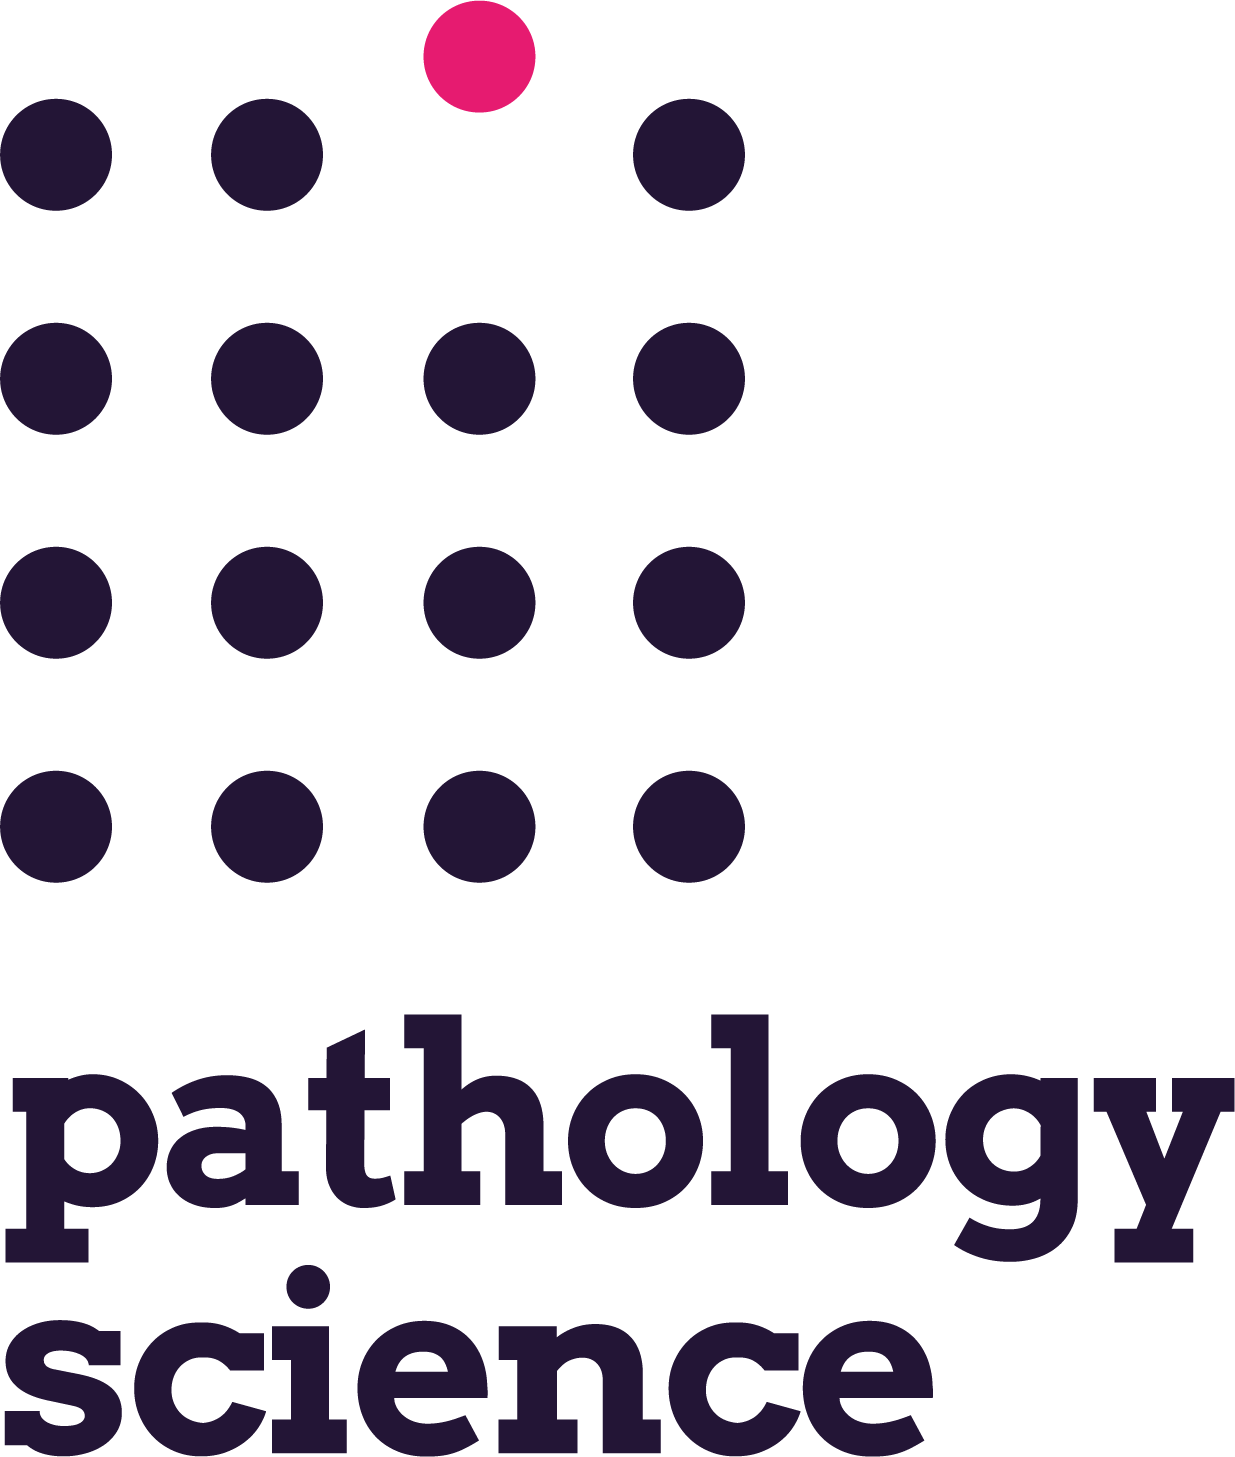 Pathology Science